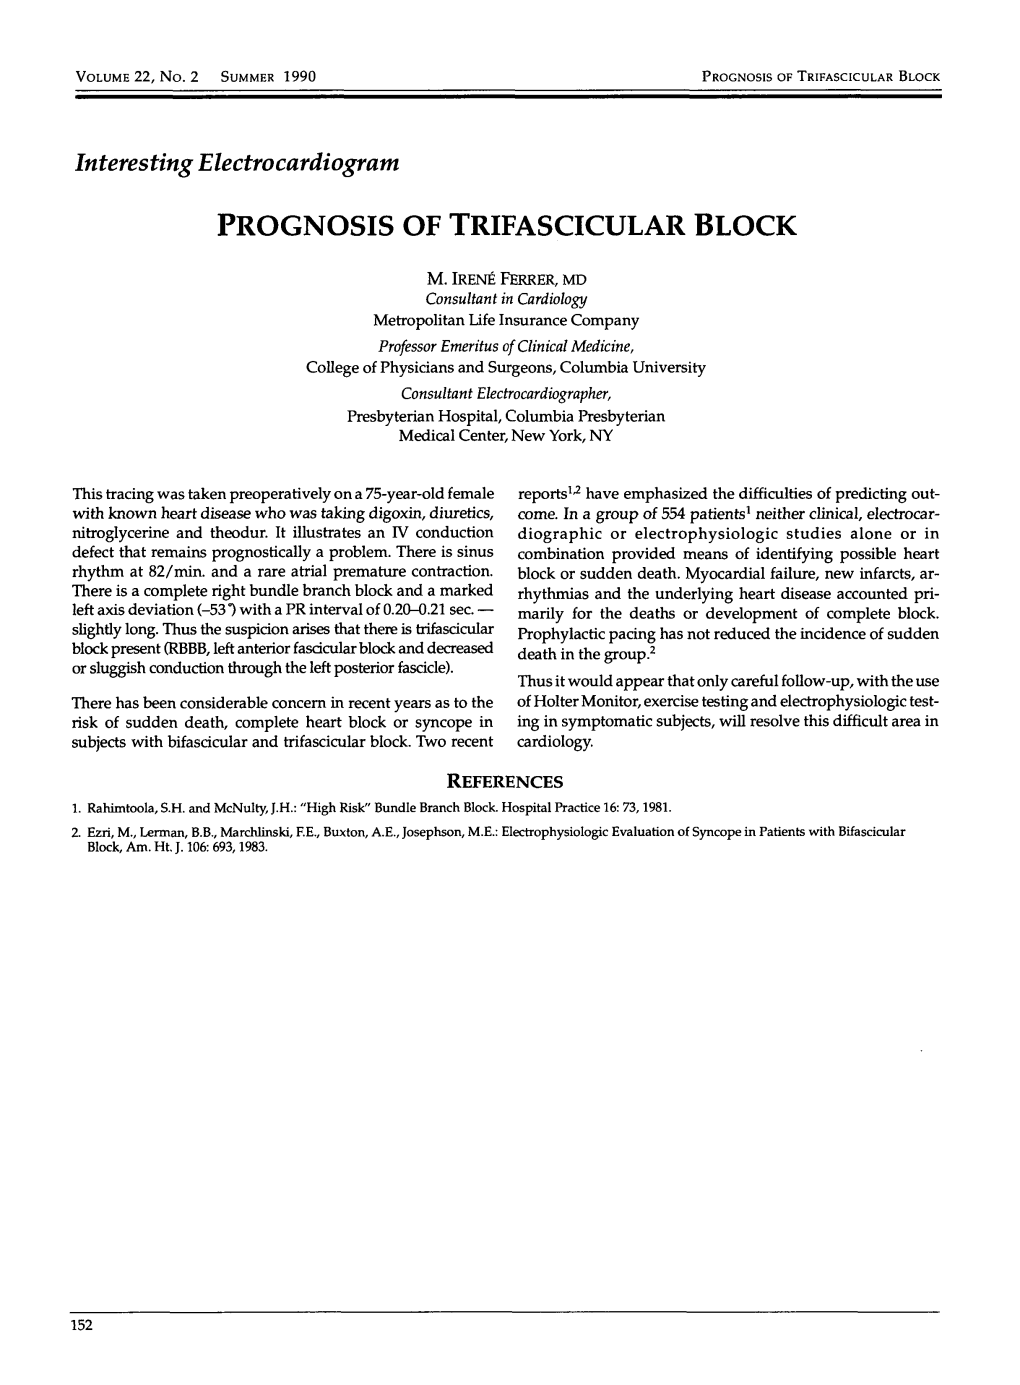 Prognosis of Trifascicular Block